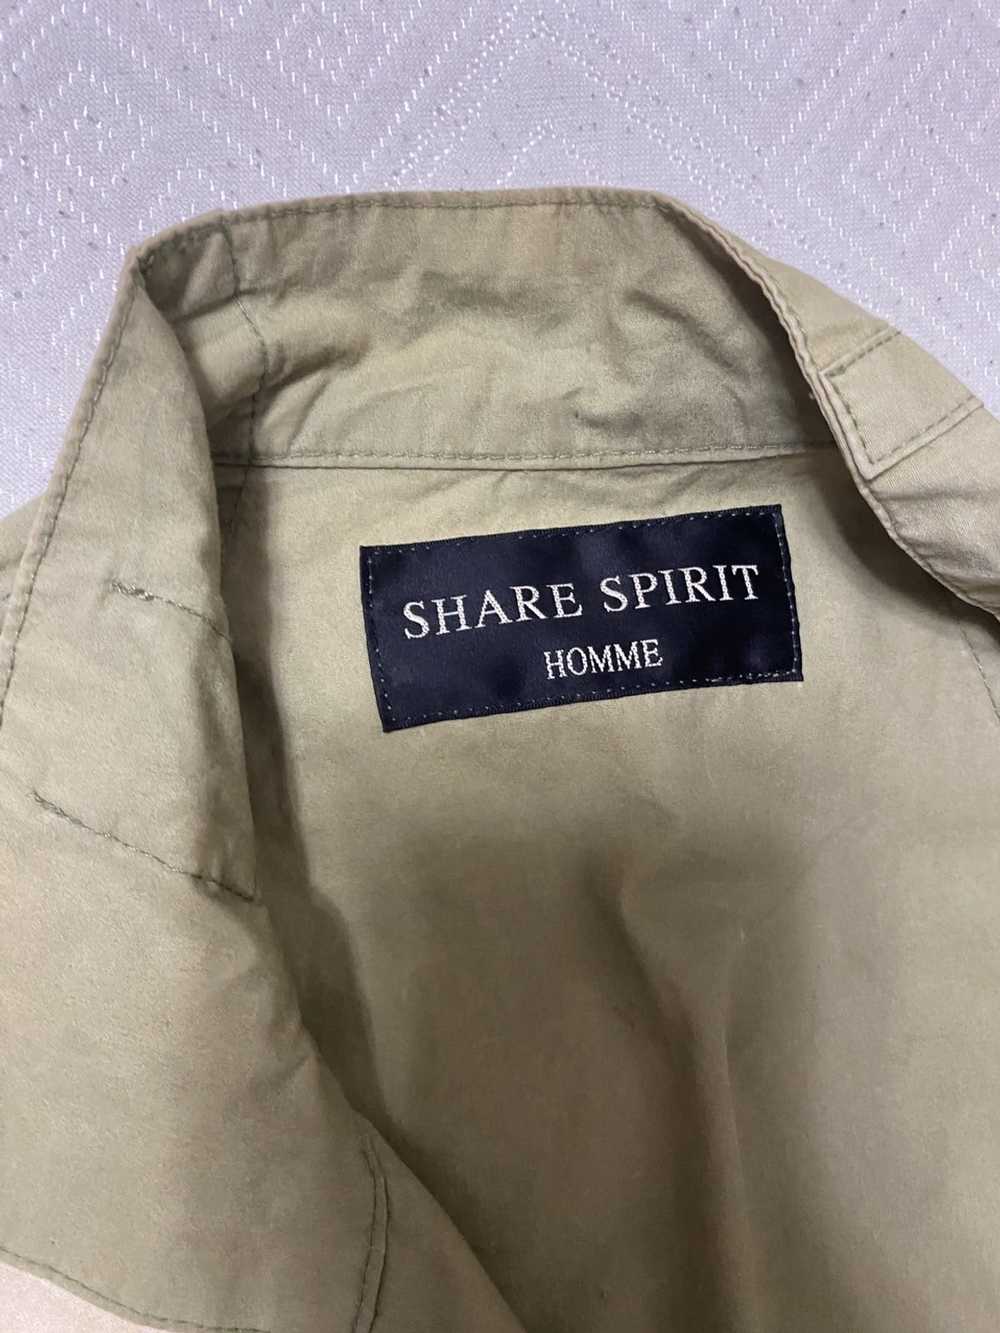 Share Spirit Homme share spirit military shirts - image 7